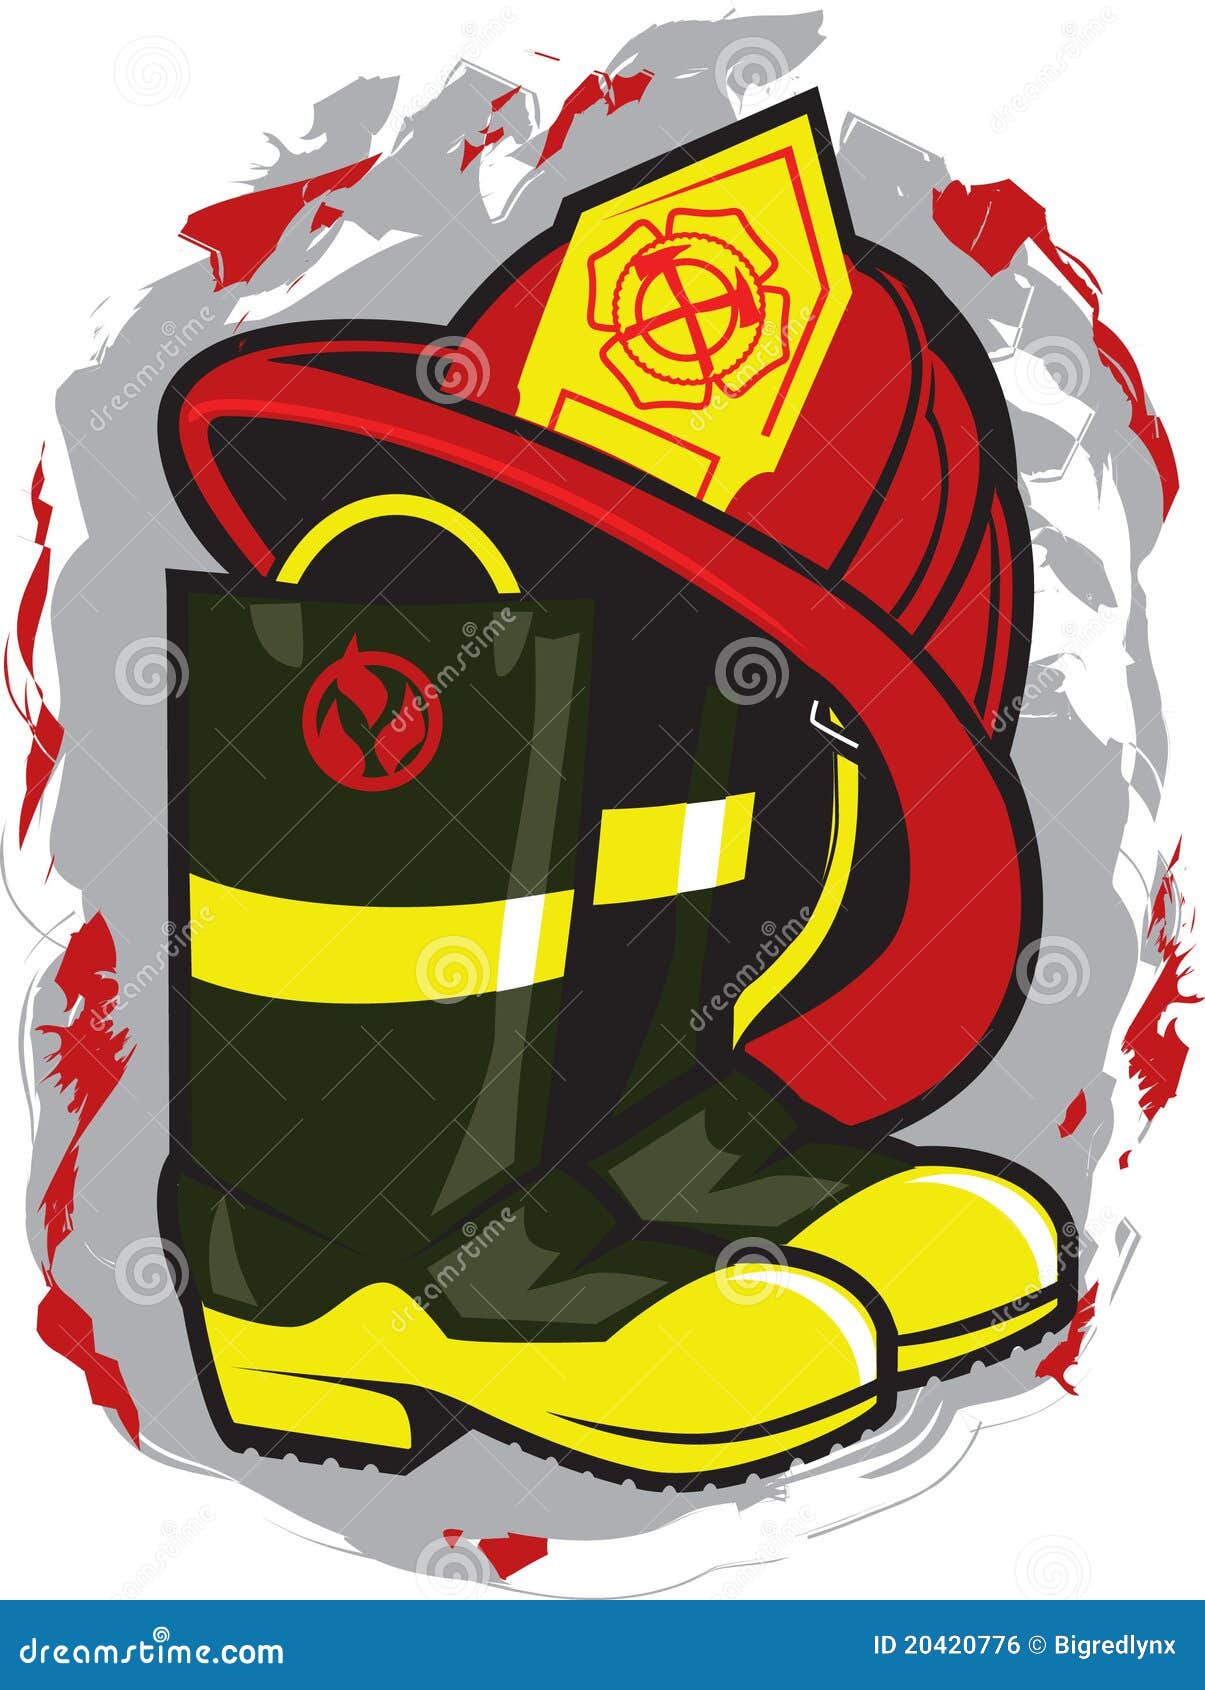 Fireman Hat and Boots stock vector. Illustration of helmet - 20420776